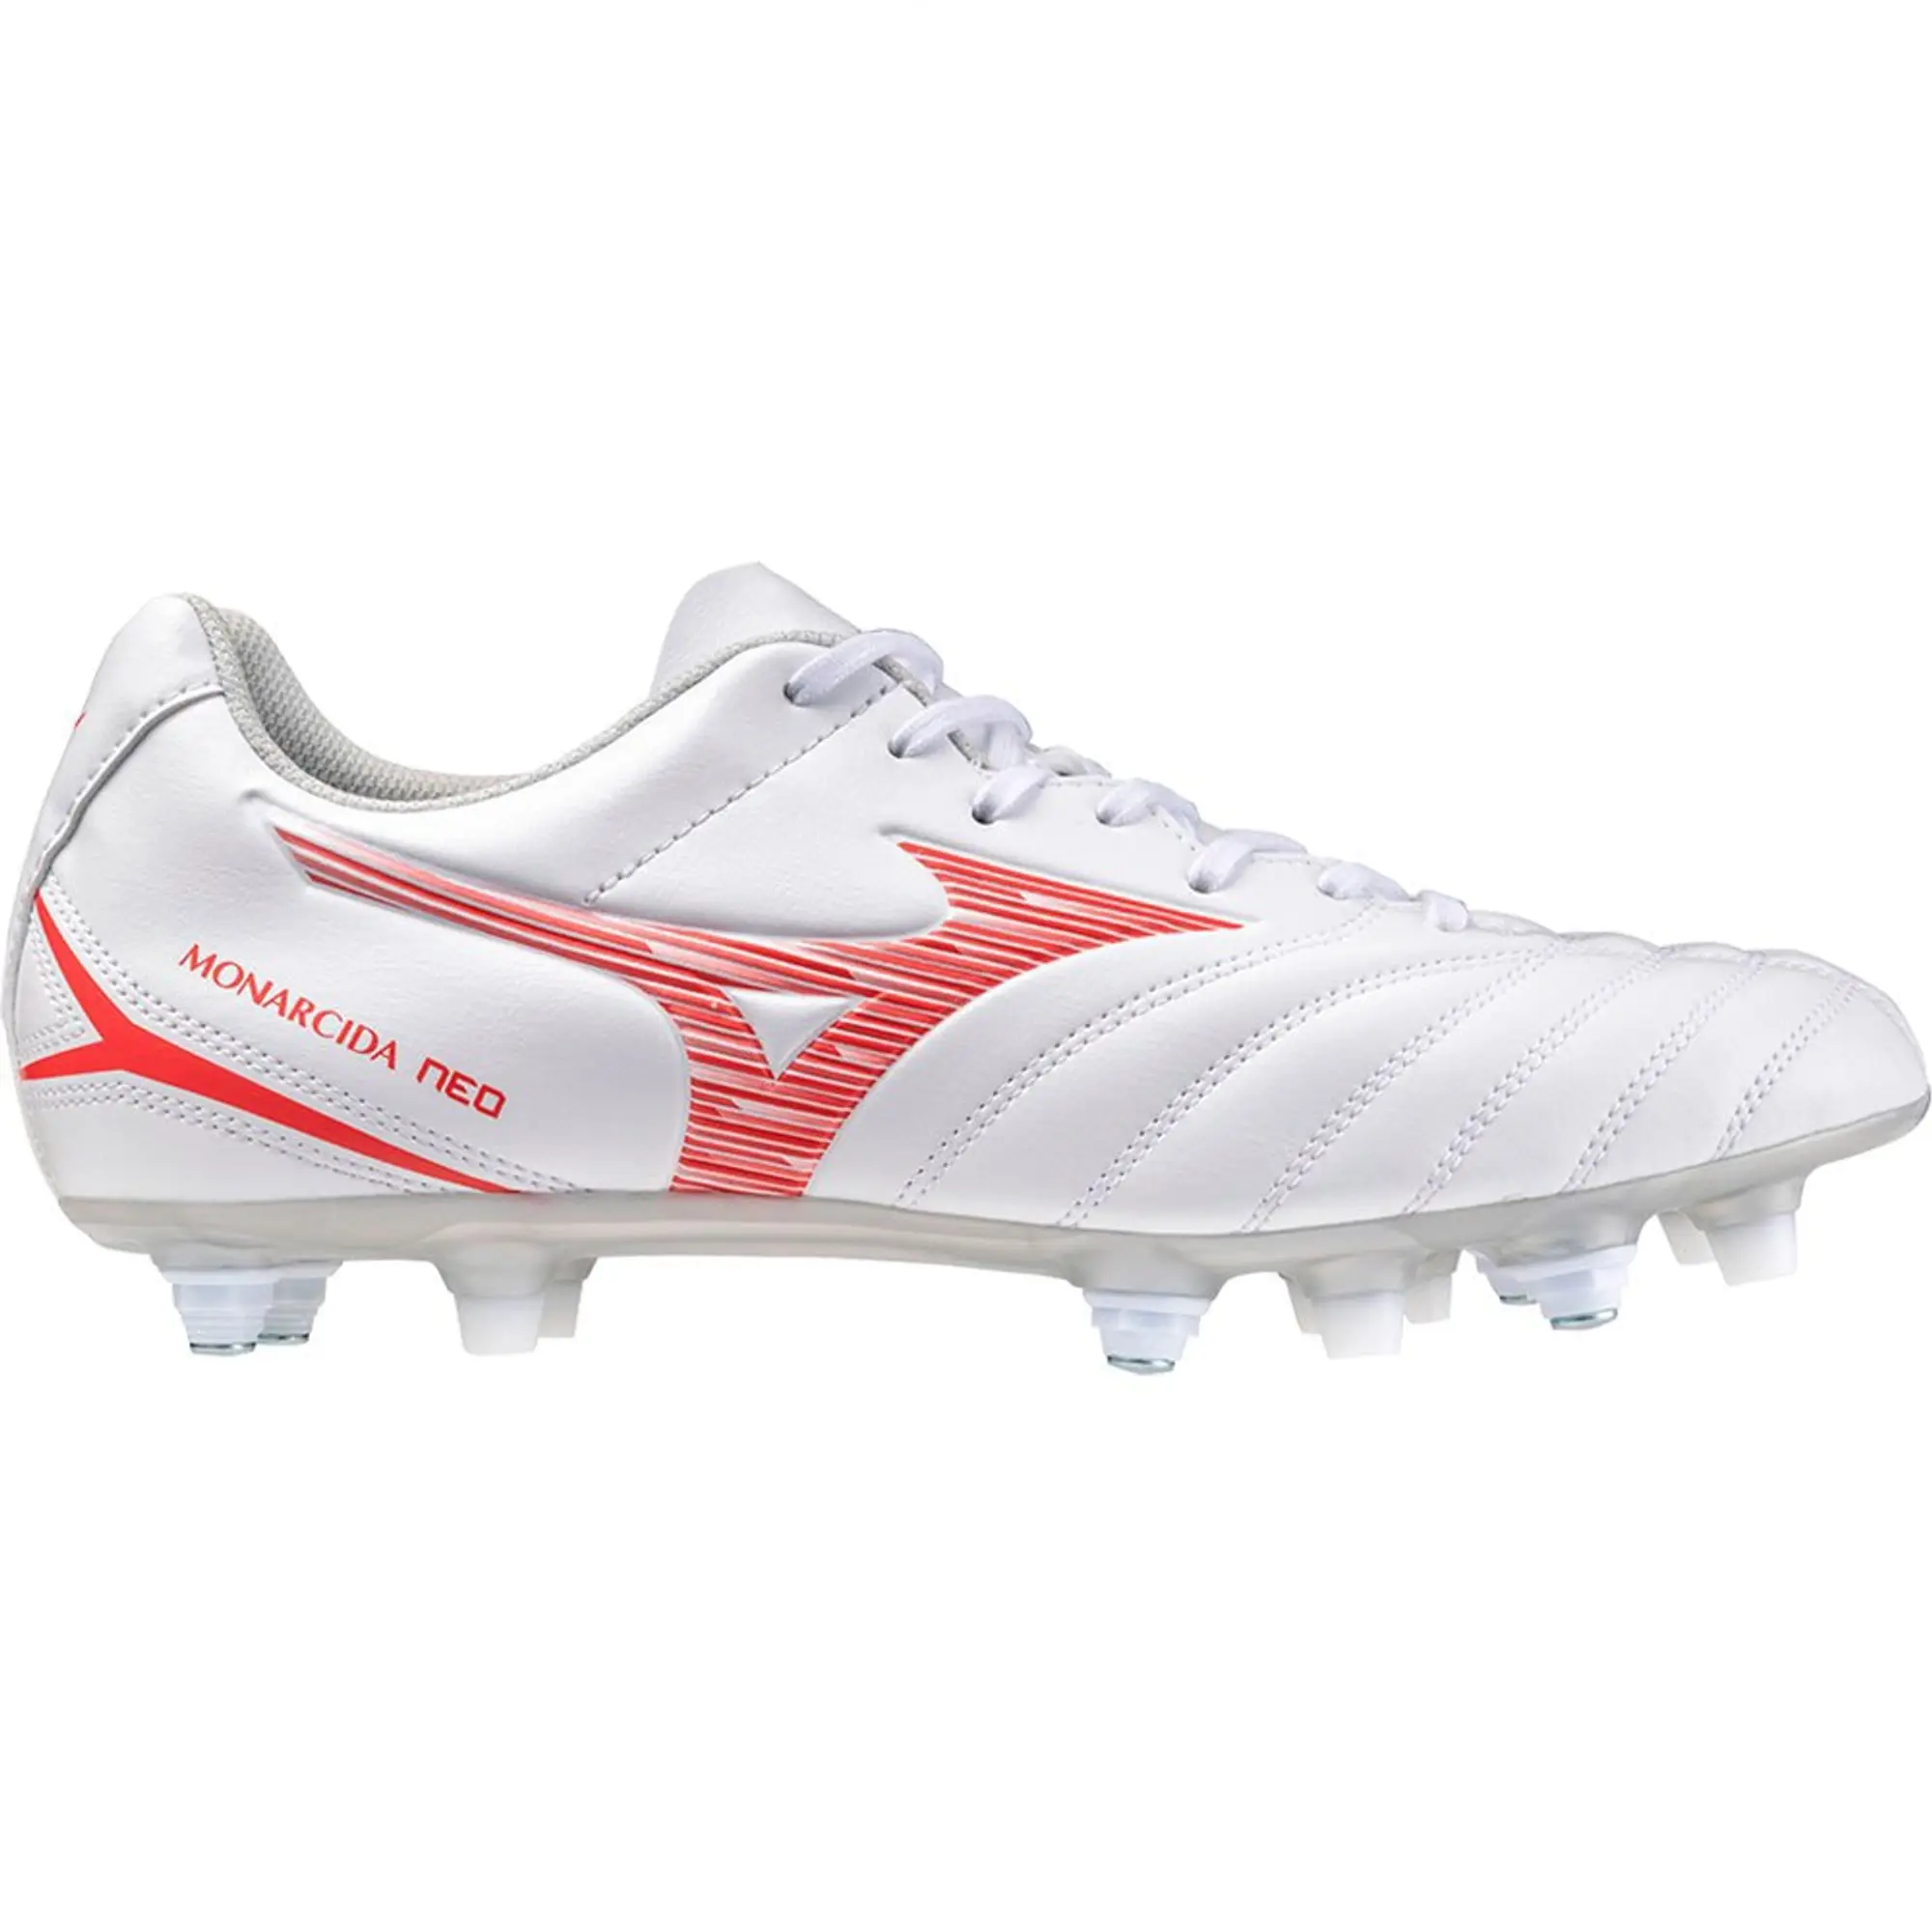 Mizuno Monarcida Neo Iii Select Mix Football Boots  - White